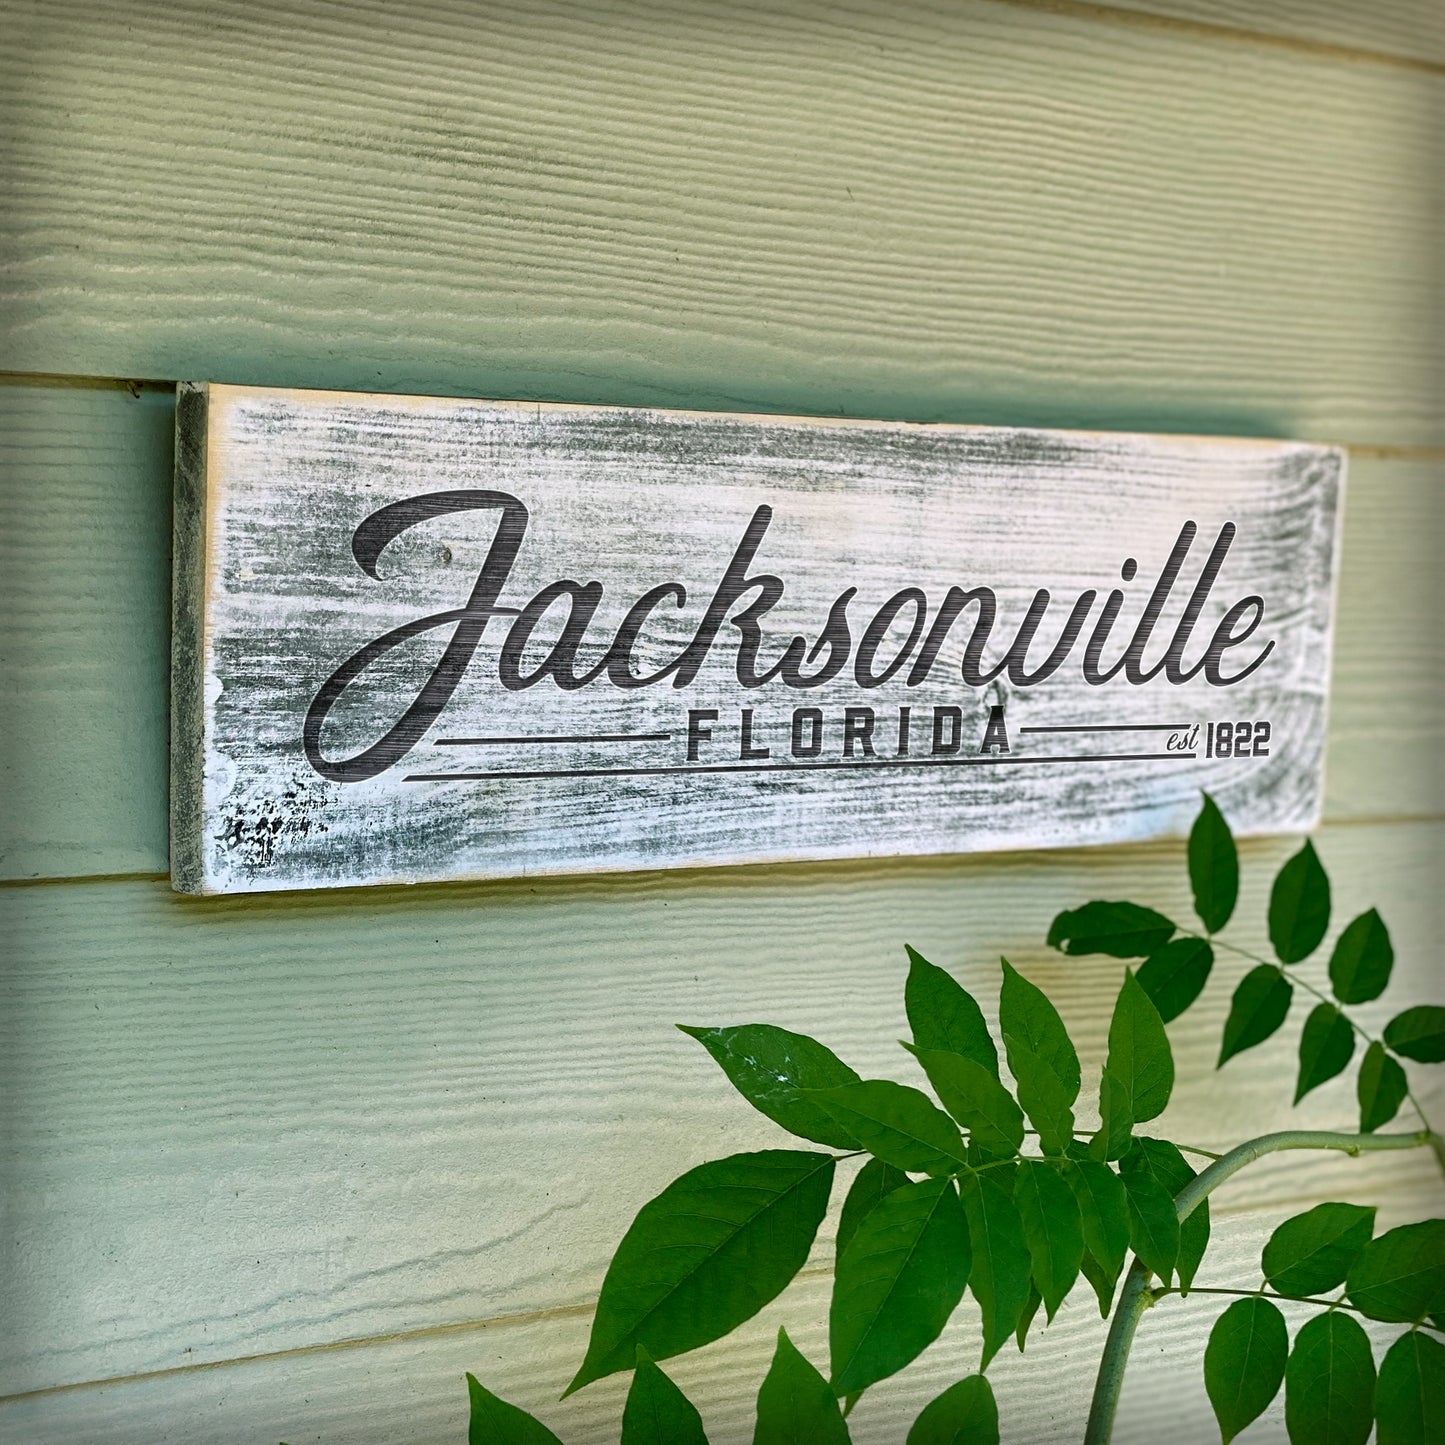 Jacksonville FL - Handcrafted Artisan Wood Sign